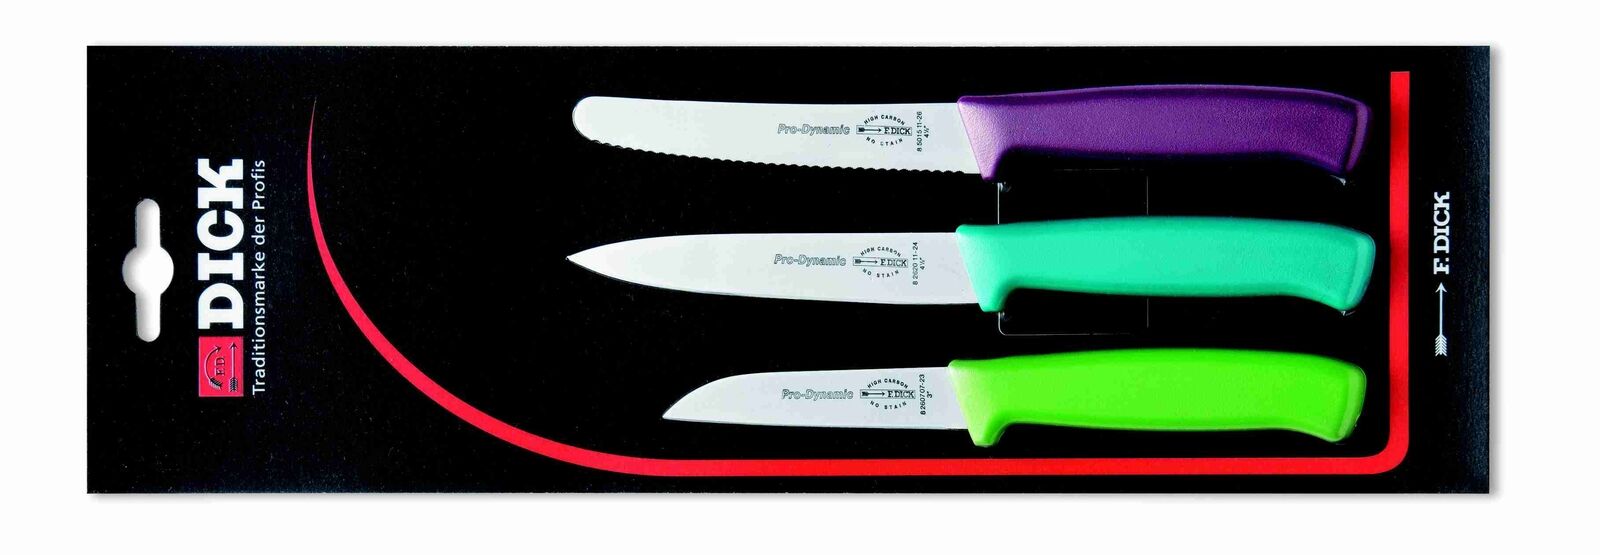 F. Dick (8570009) Kitchen Knife Set - 3-Piece, 3-colors-cityfoodequipment.com